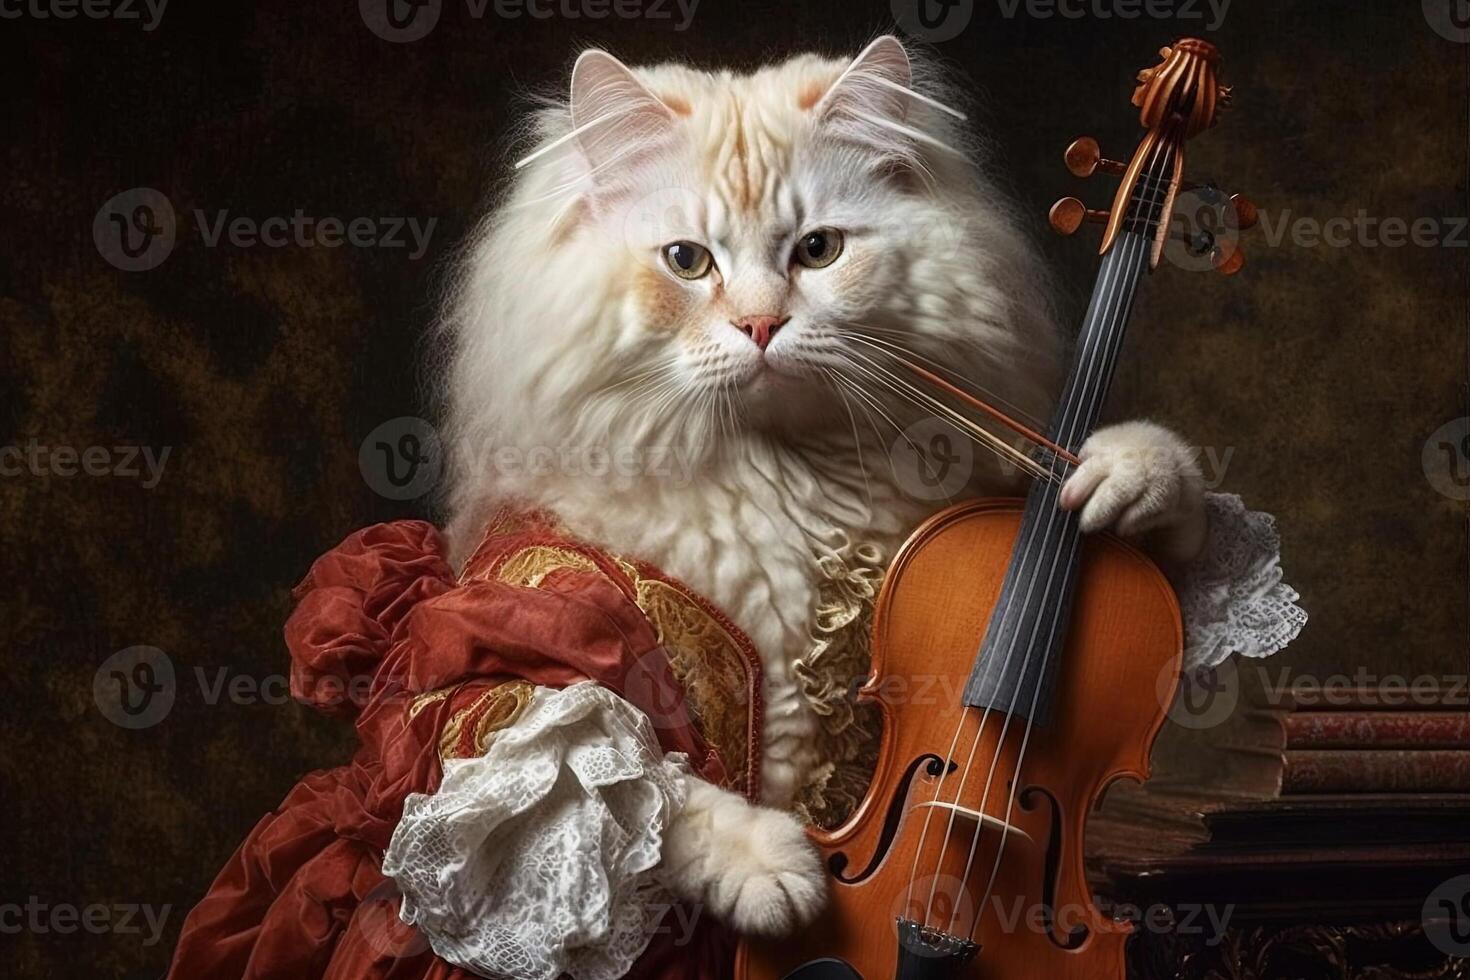 Cat as Vivaldi famous historical character portrait illustration photo